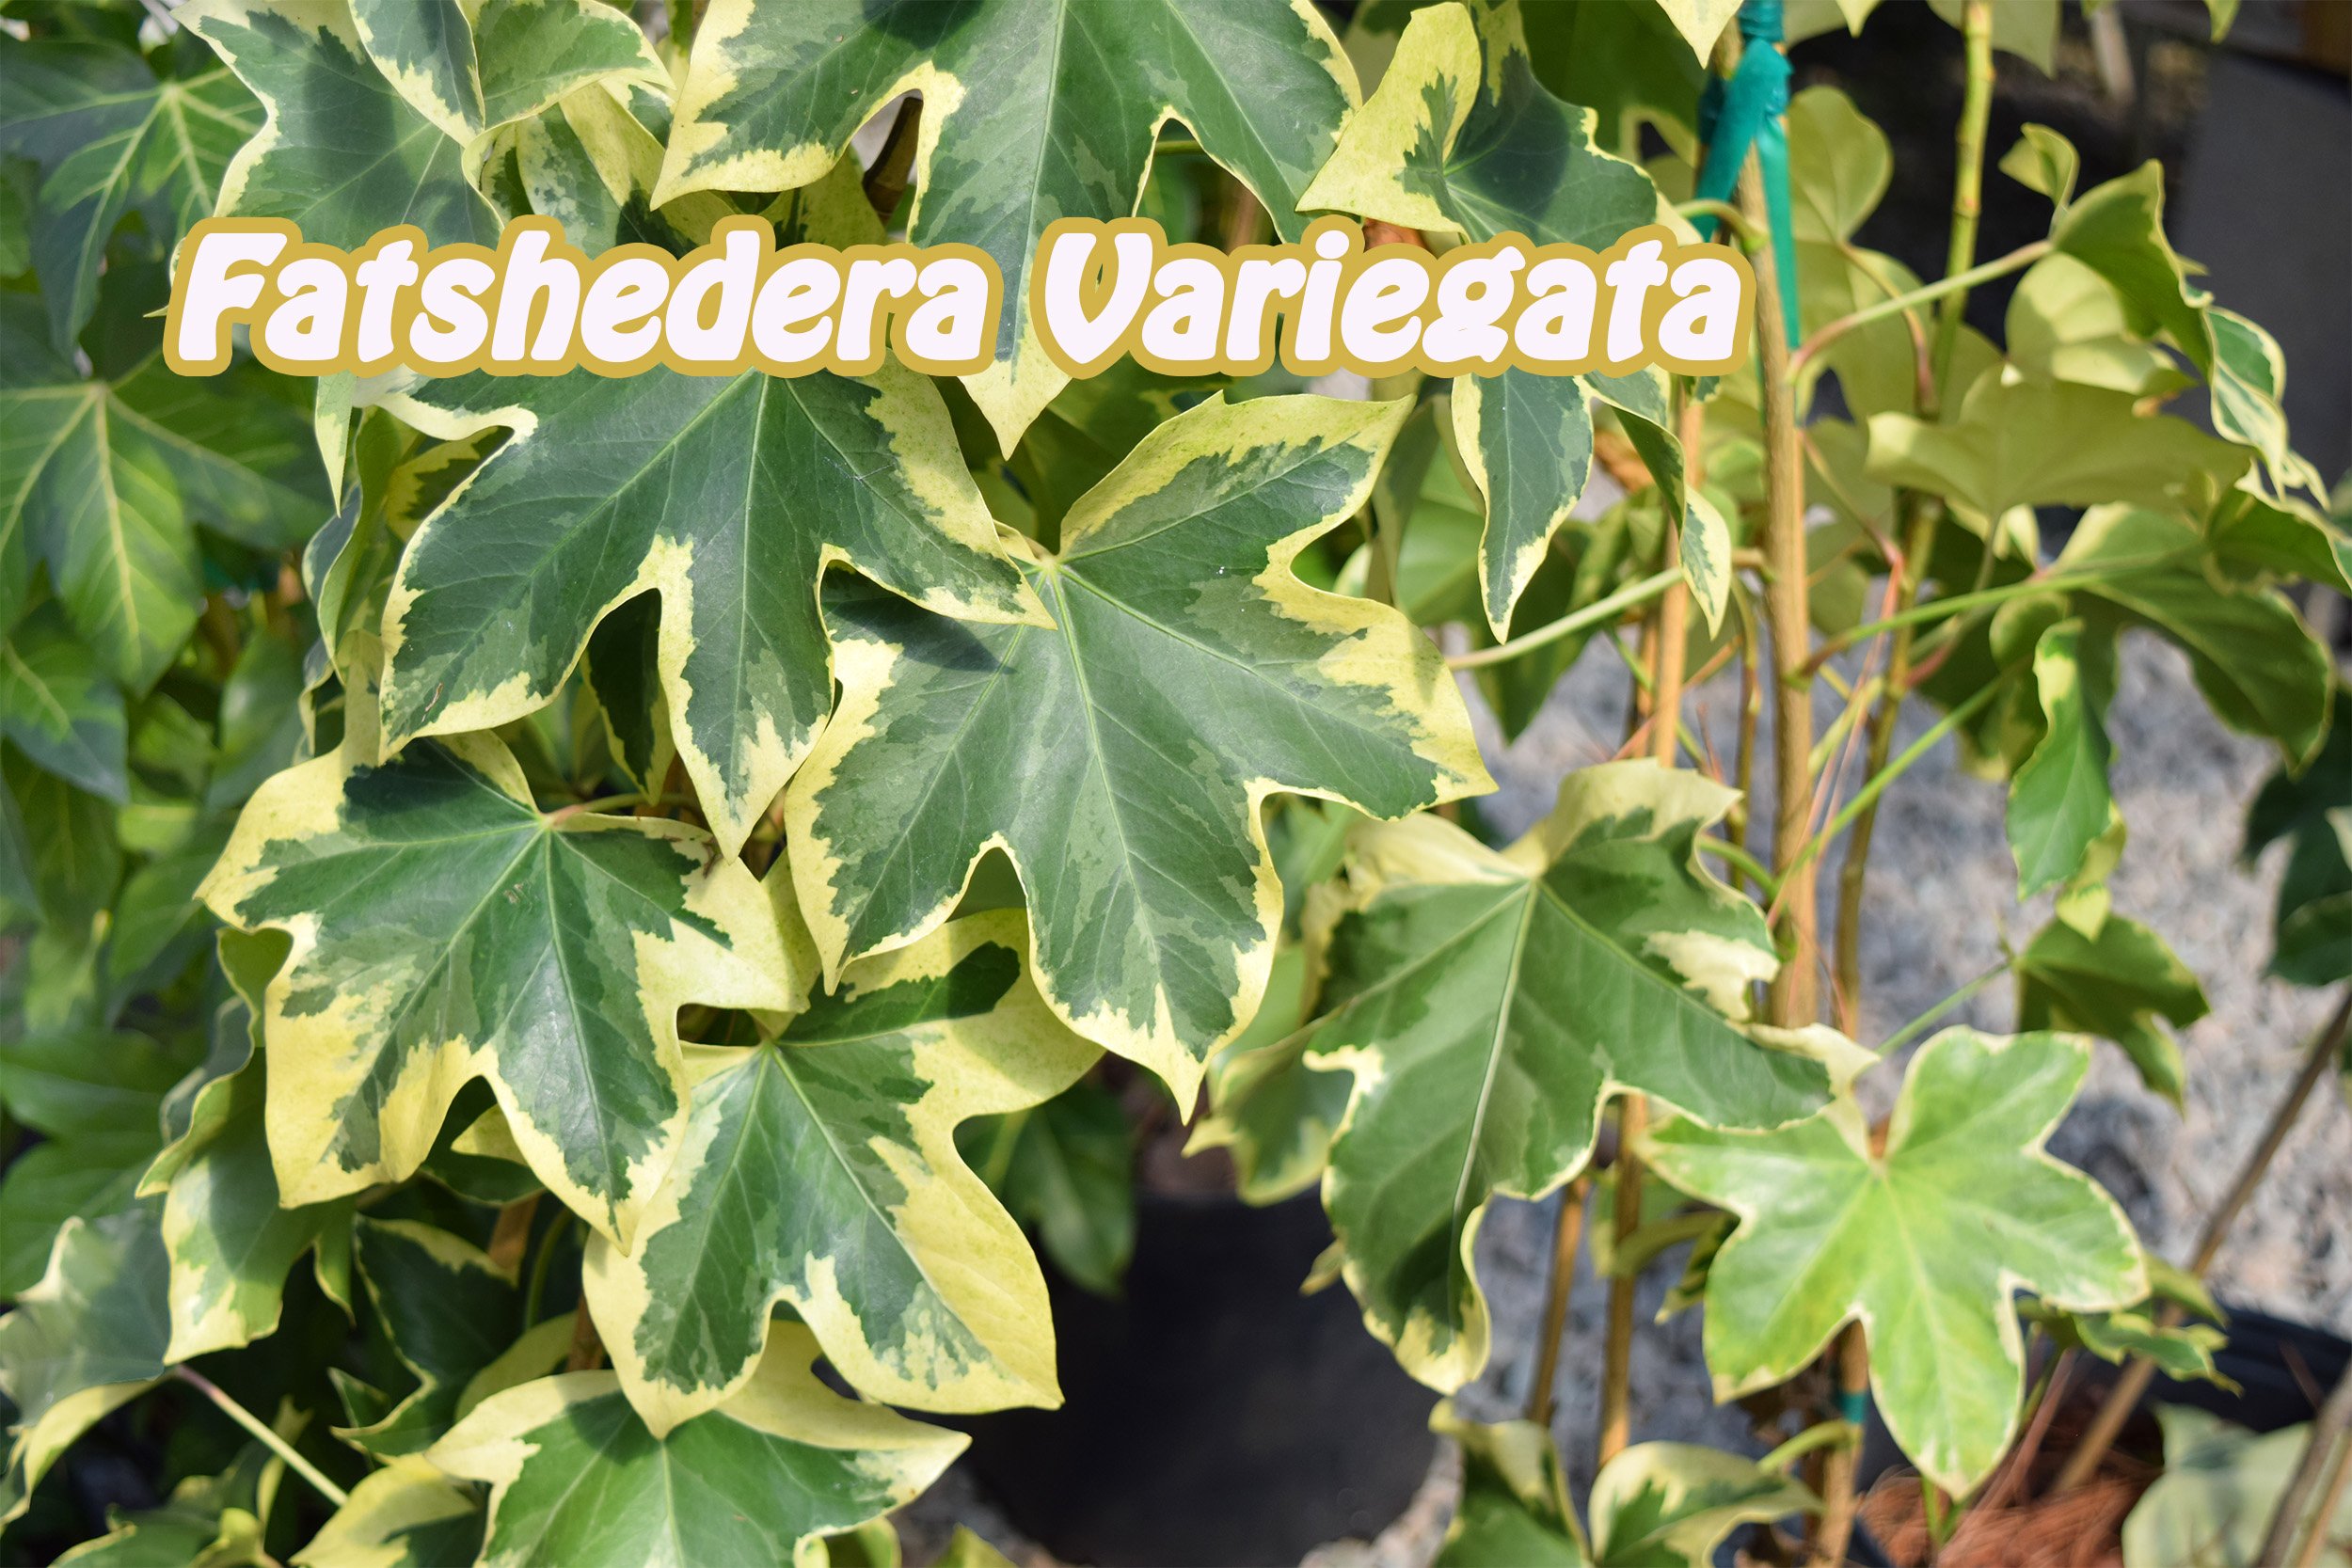 fatshedera variegata.jpg